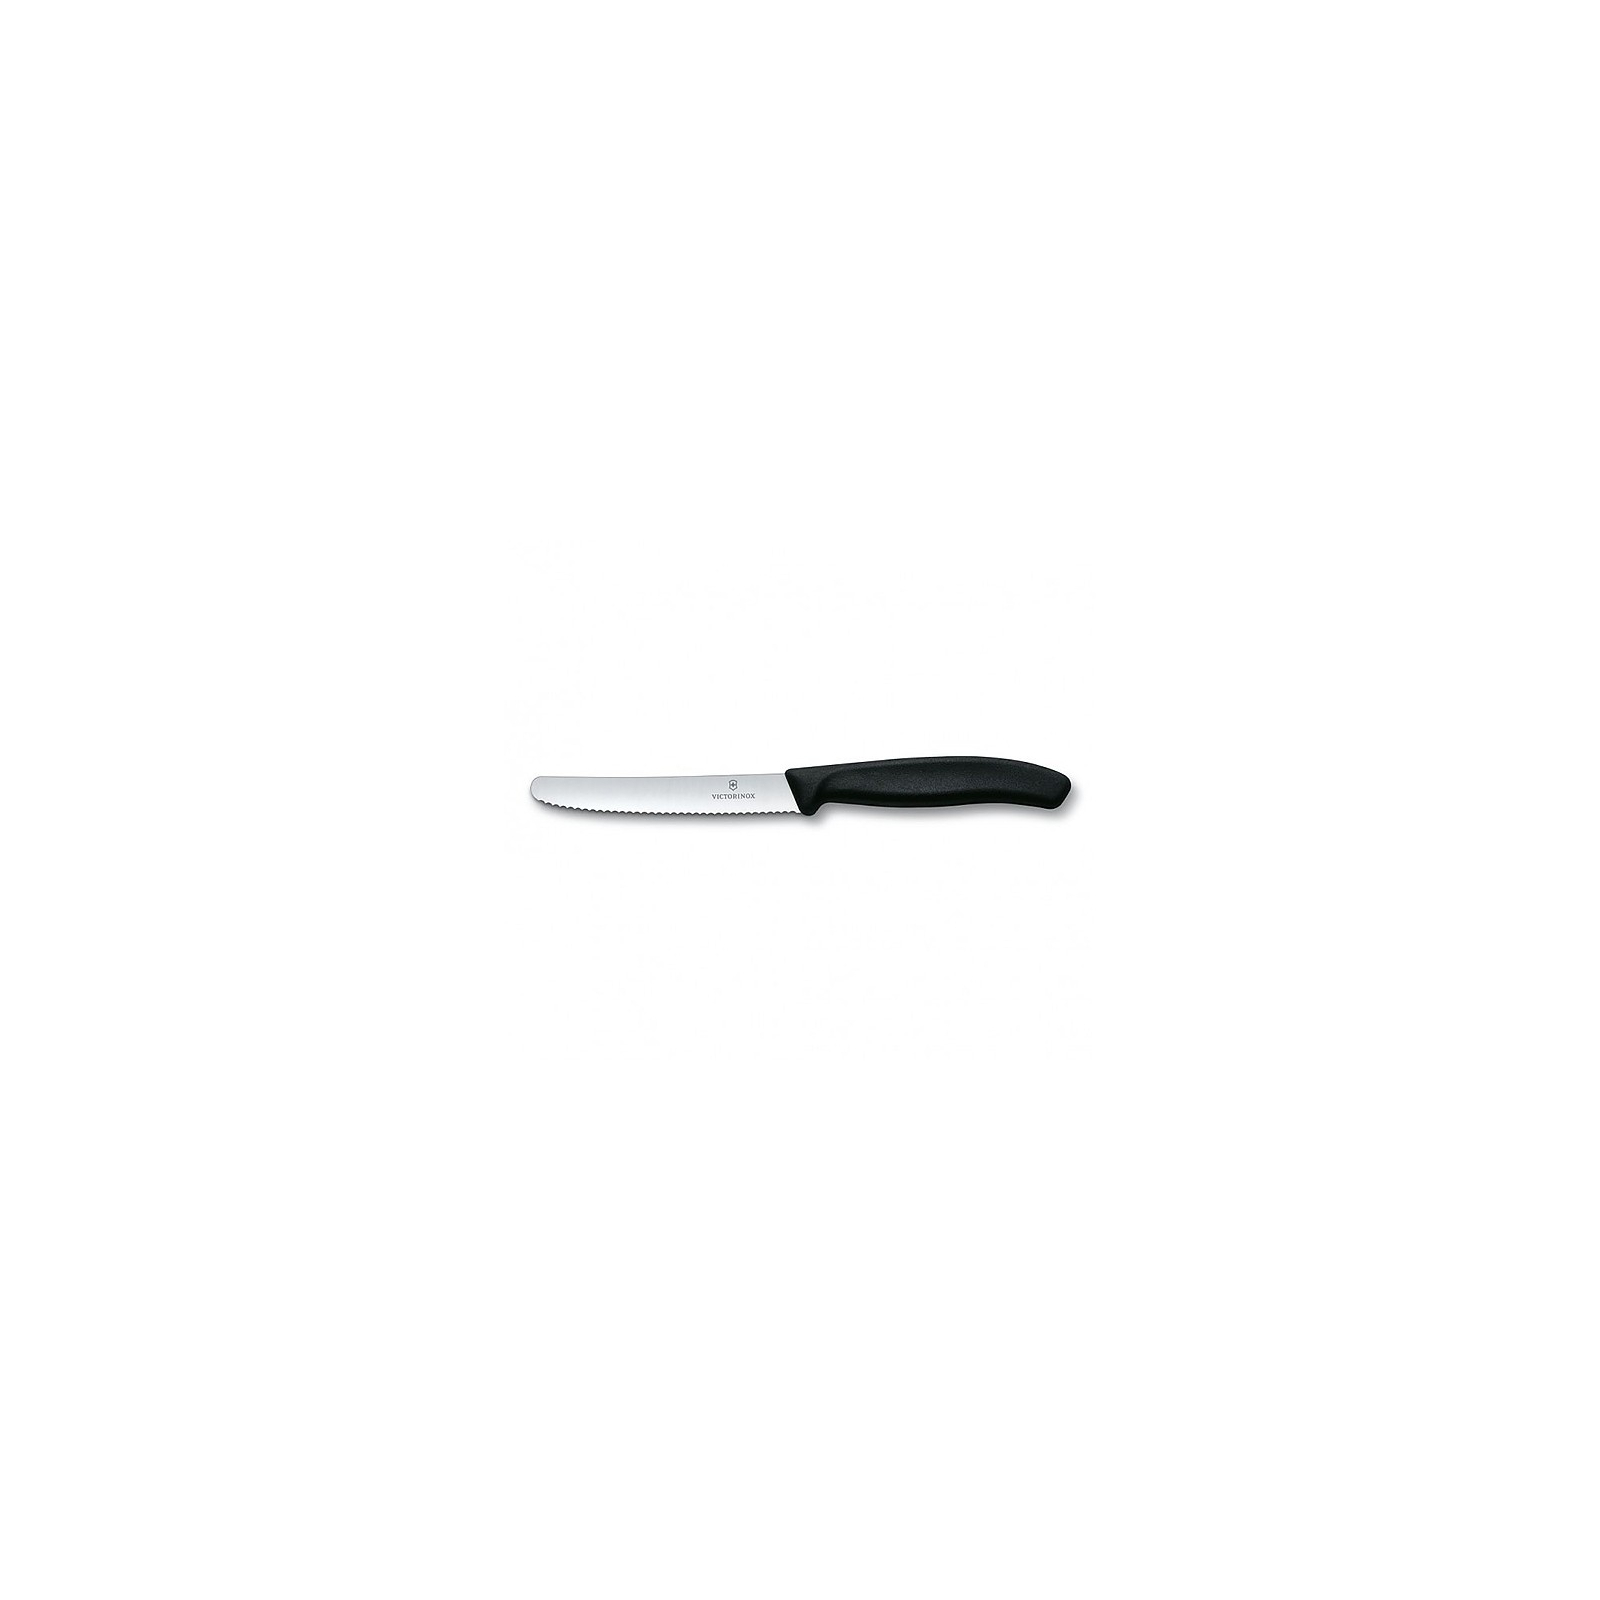 Набір ножів Victorinox SwissClassic из 3 предметов Черный с овощечисткой (6.7113.31) зображення 3